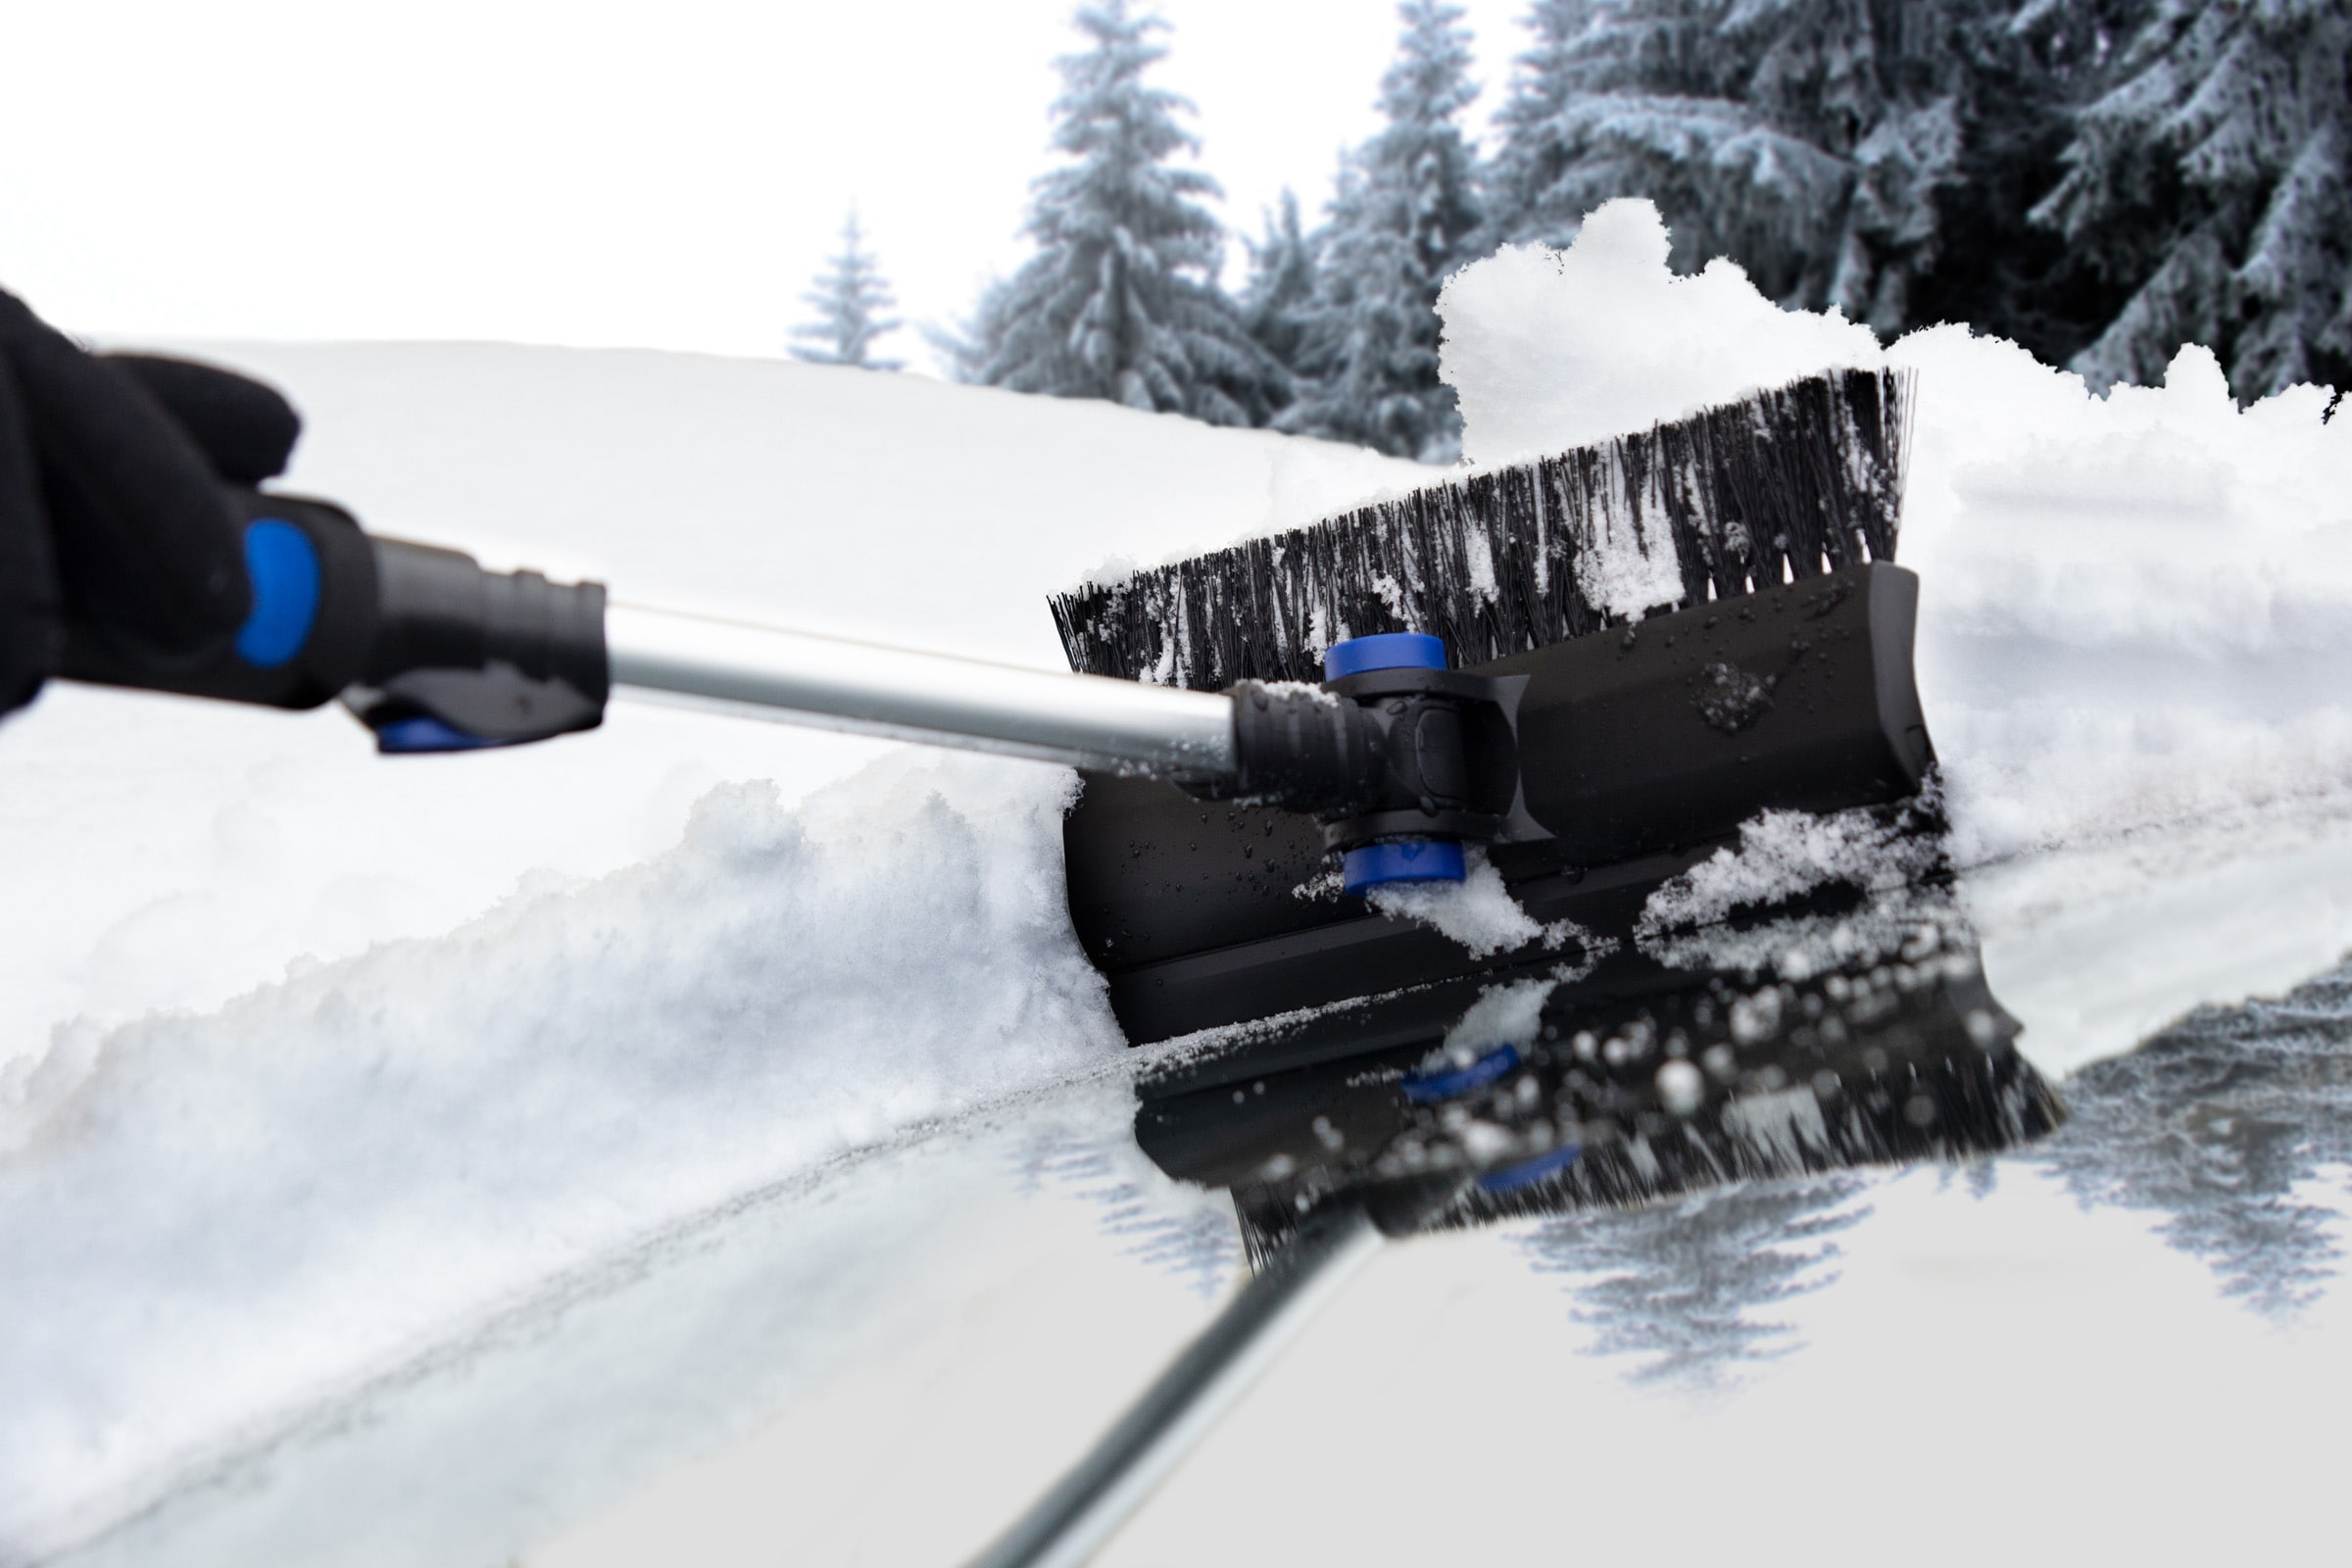 Subzero 80052 52 Extension Quick-Release Handle Ice Scraper and Pivoting Snow Broom